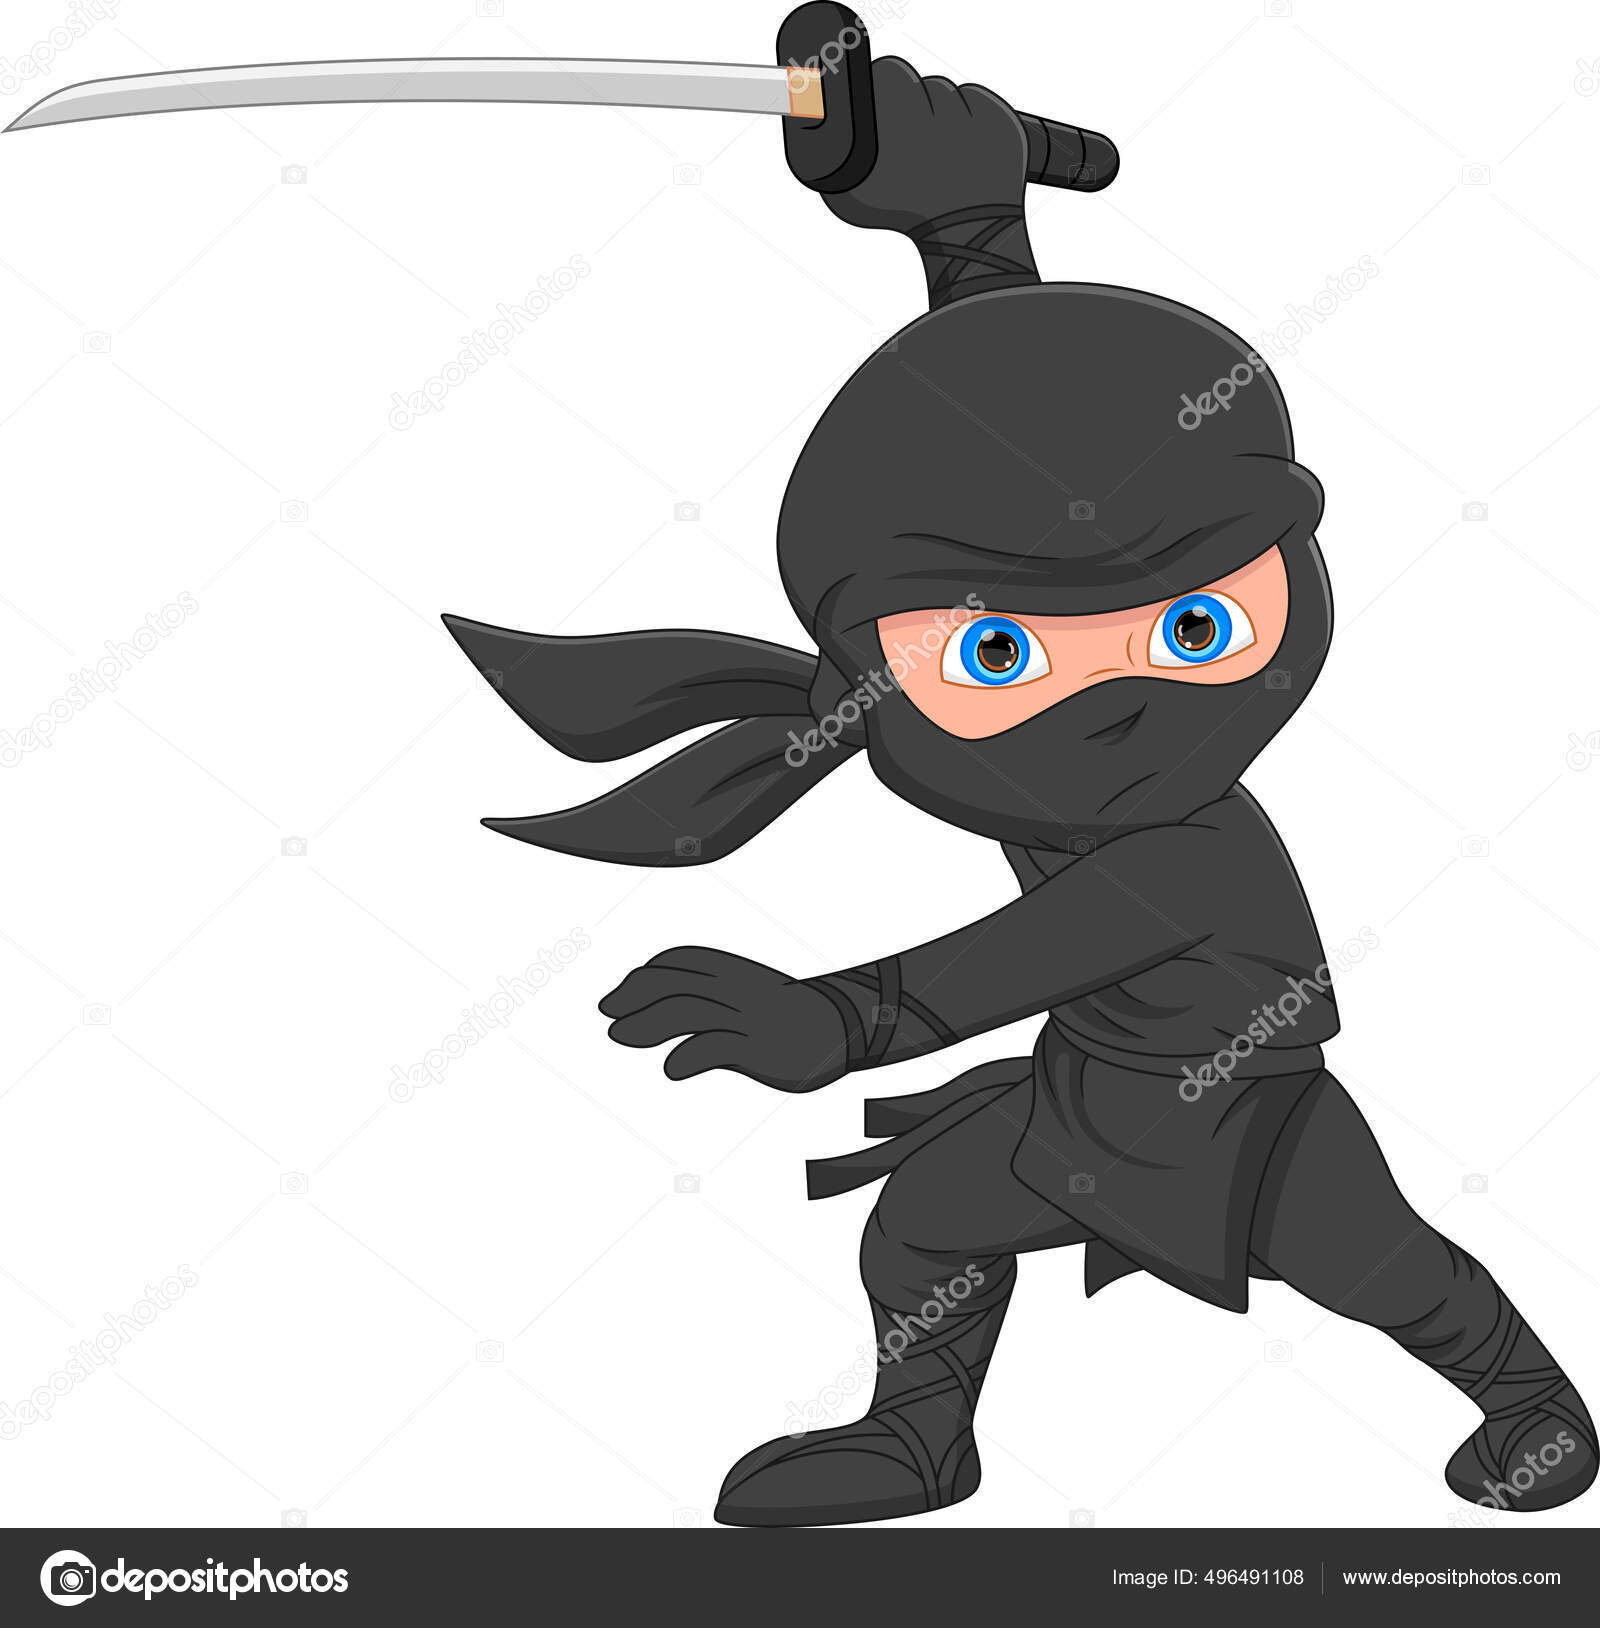 O desenho animado bonito do ninja